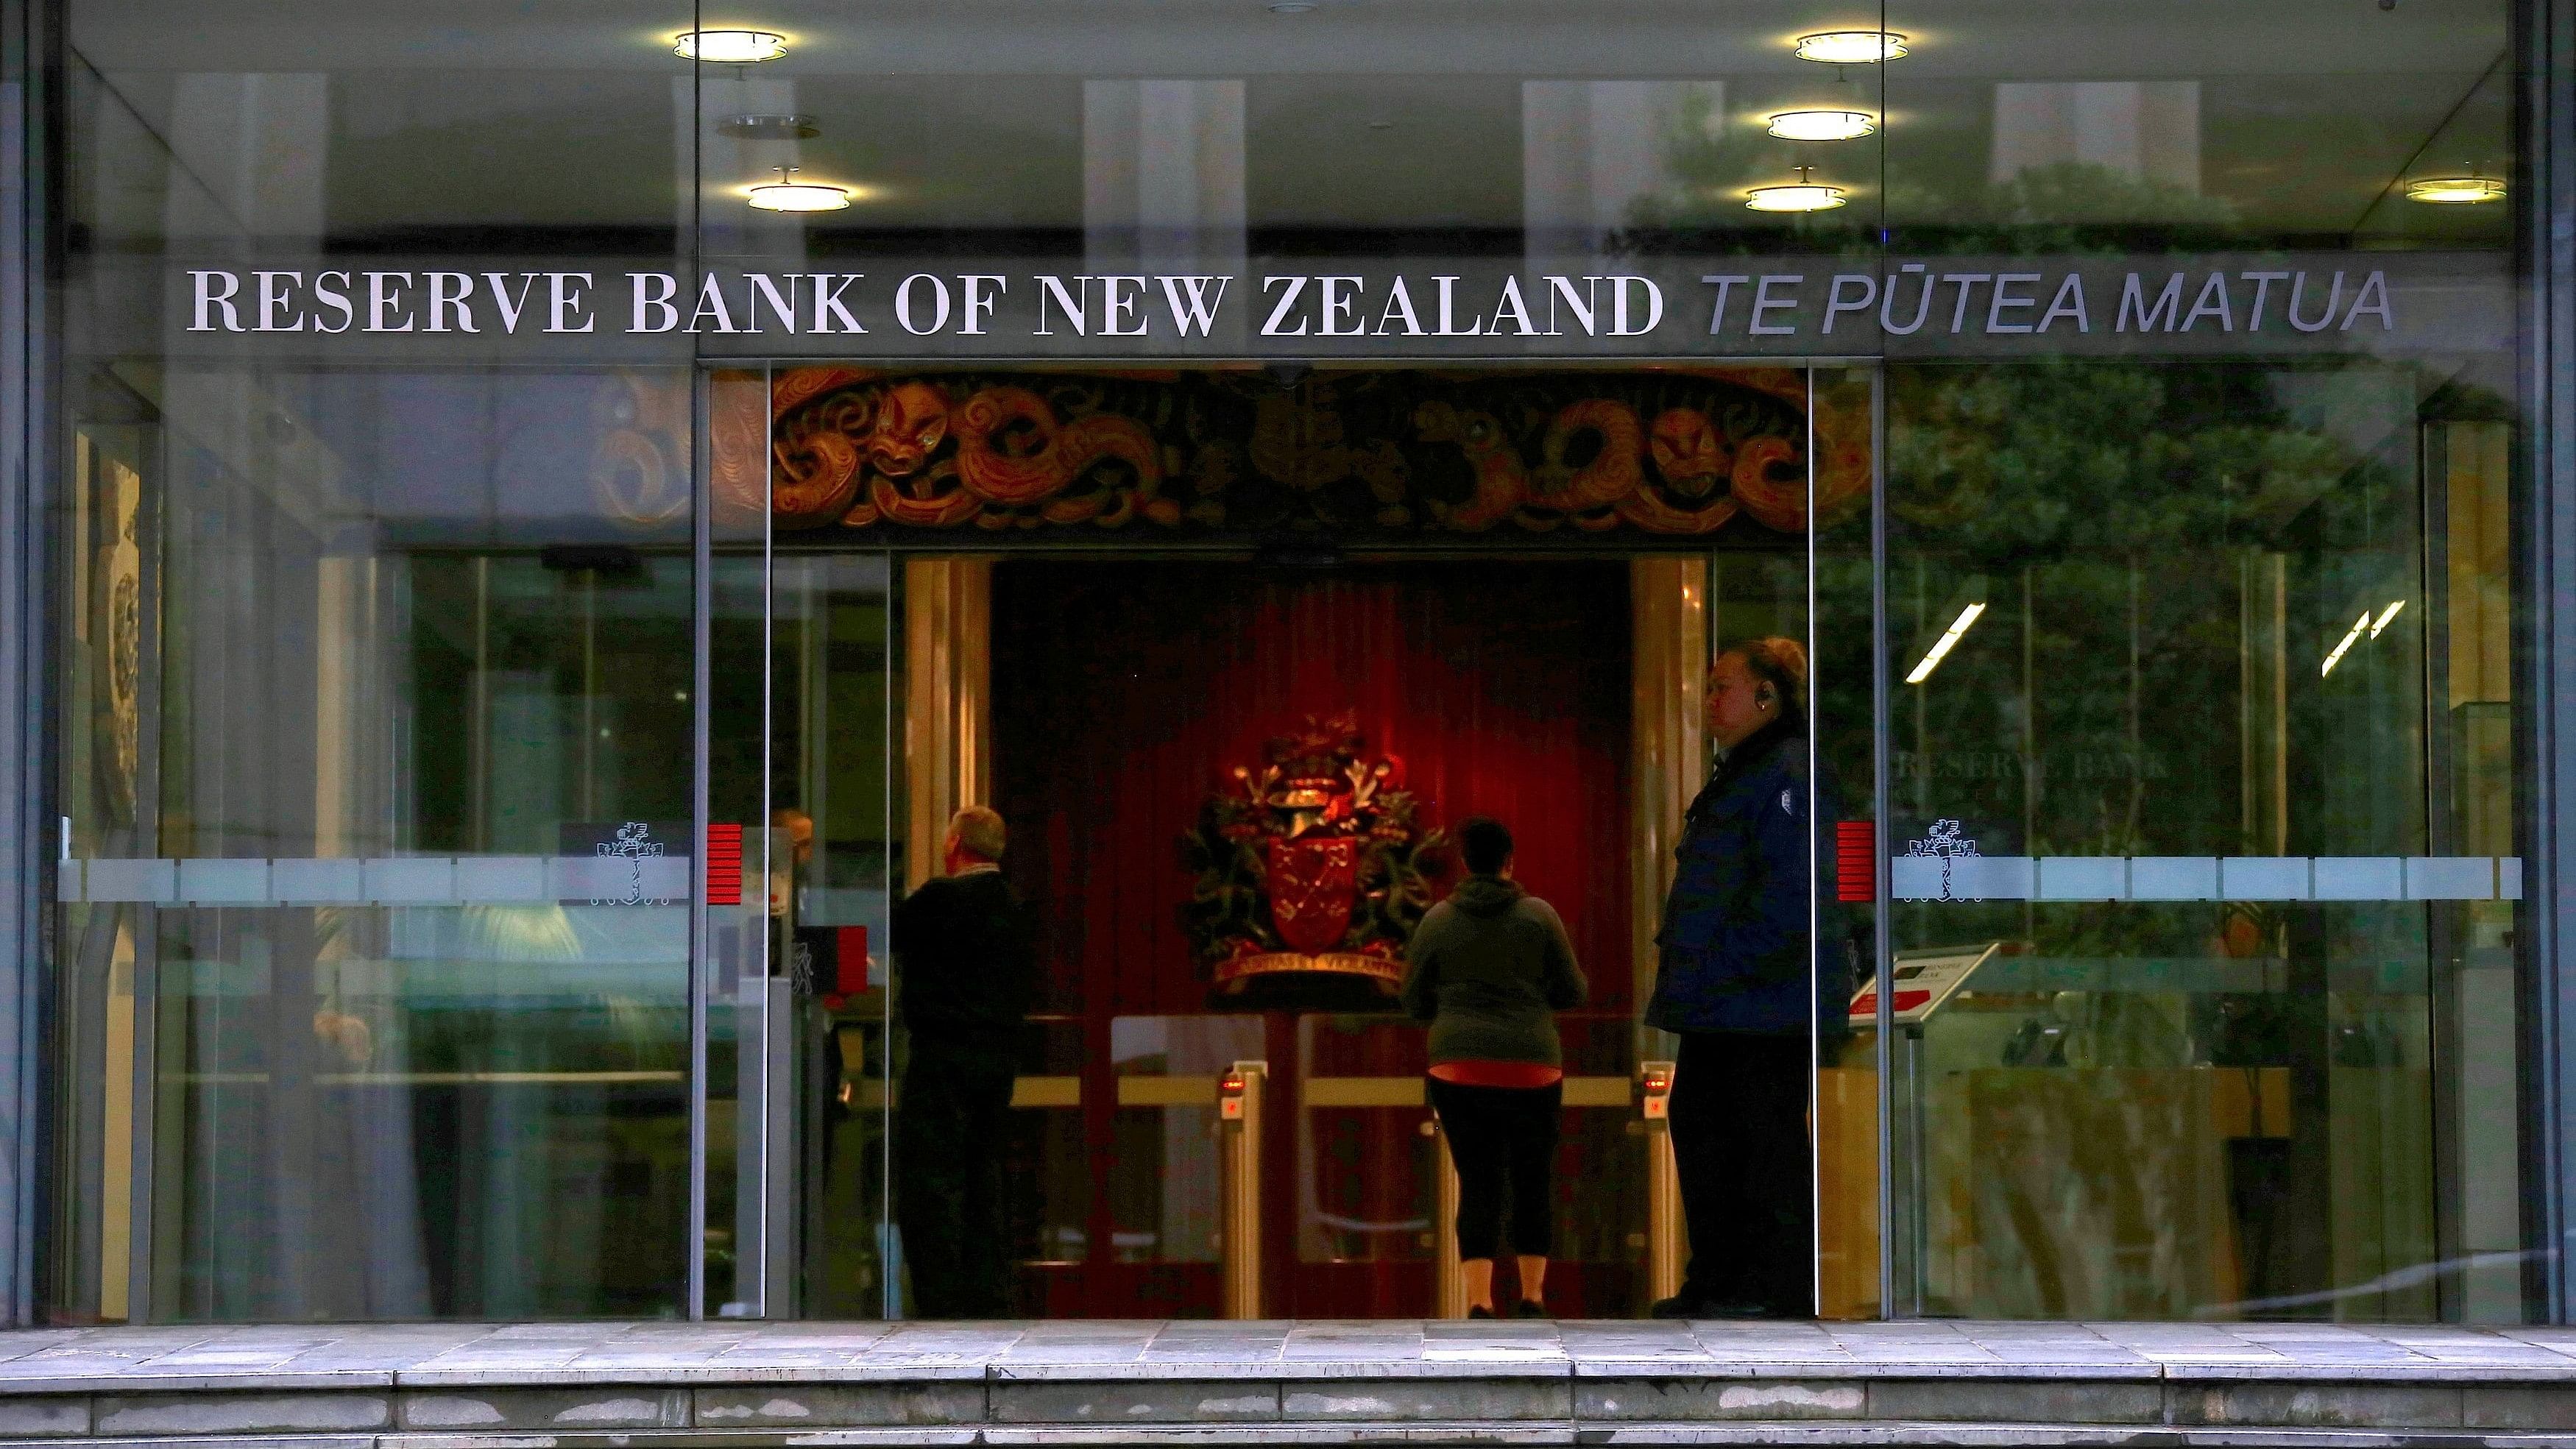 <div class="paragraphs"><p> Reserve Bank of New Zealand.</p></div>